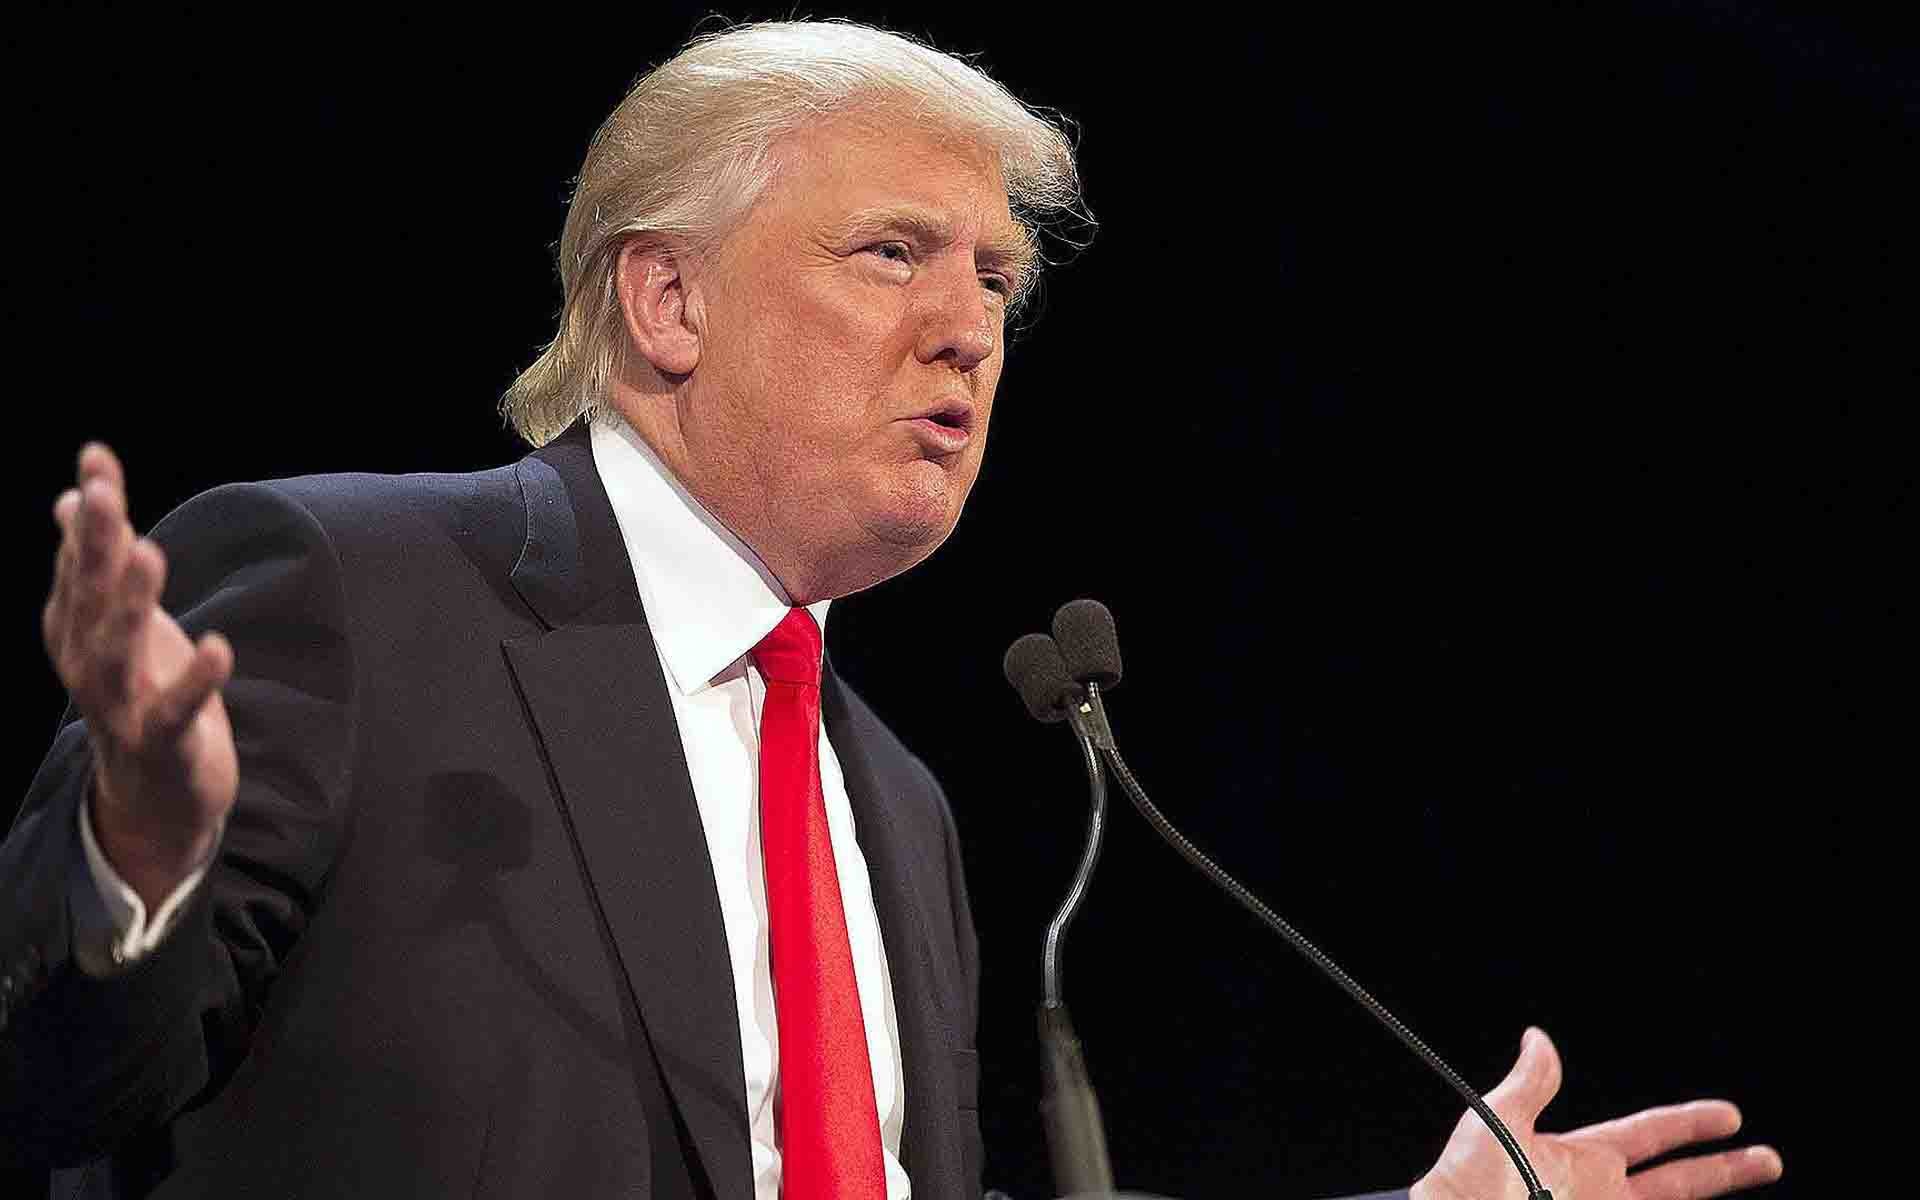 … Donald-Trump-HD-Wallpapers-Free-Download-For-Desktop- …